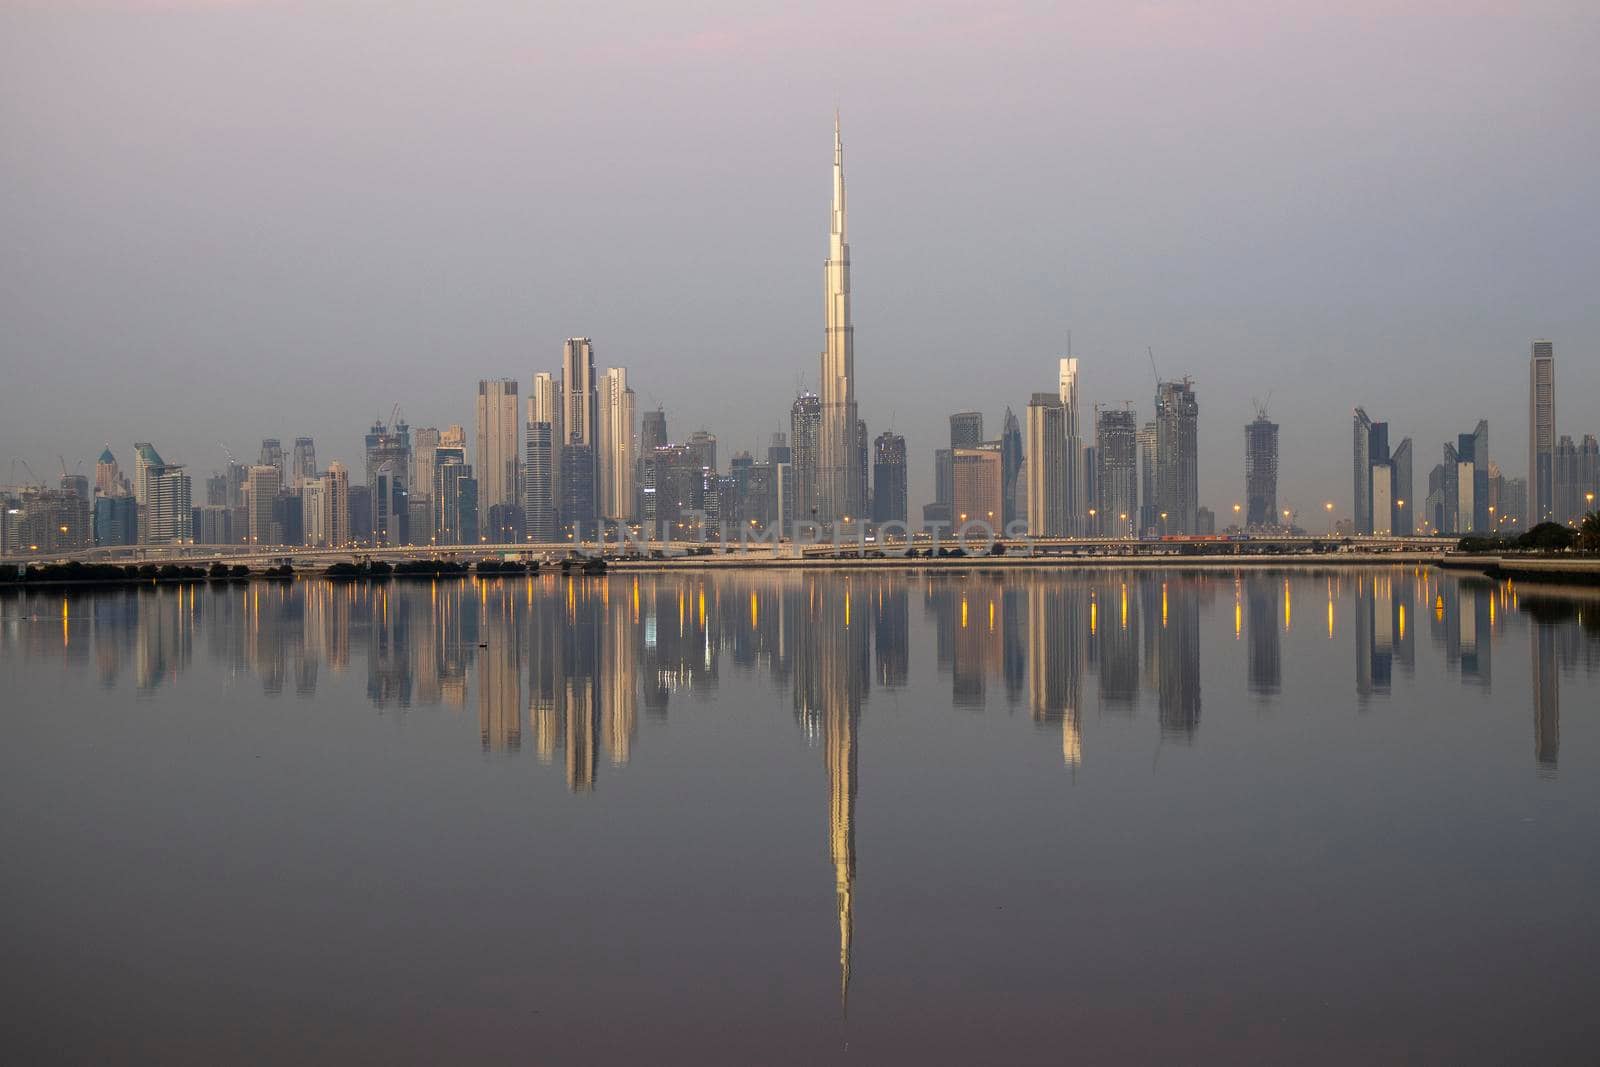 Dubai, UAE - 01.29.2021 Sunrise over Dubai city skyline.